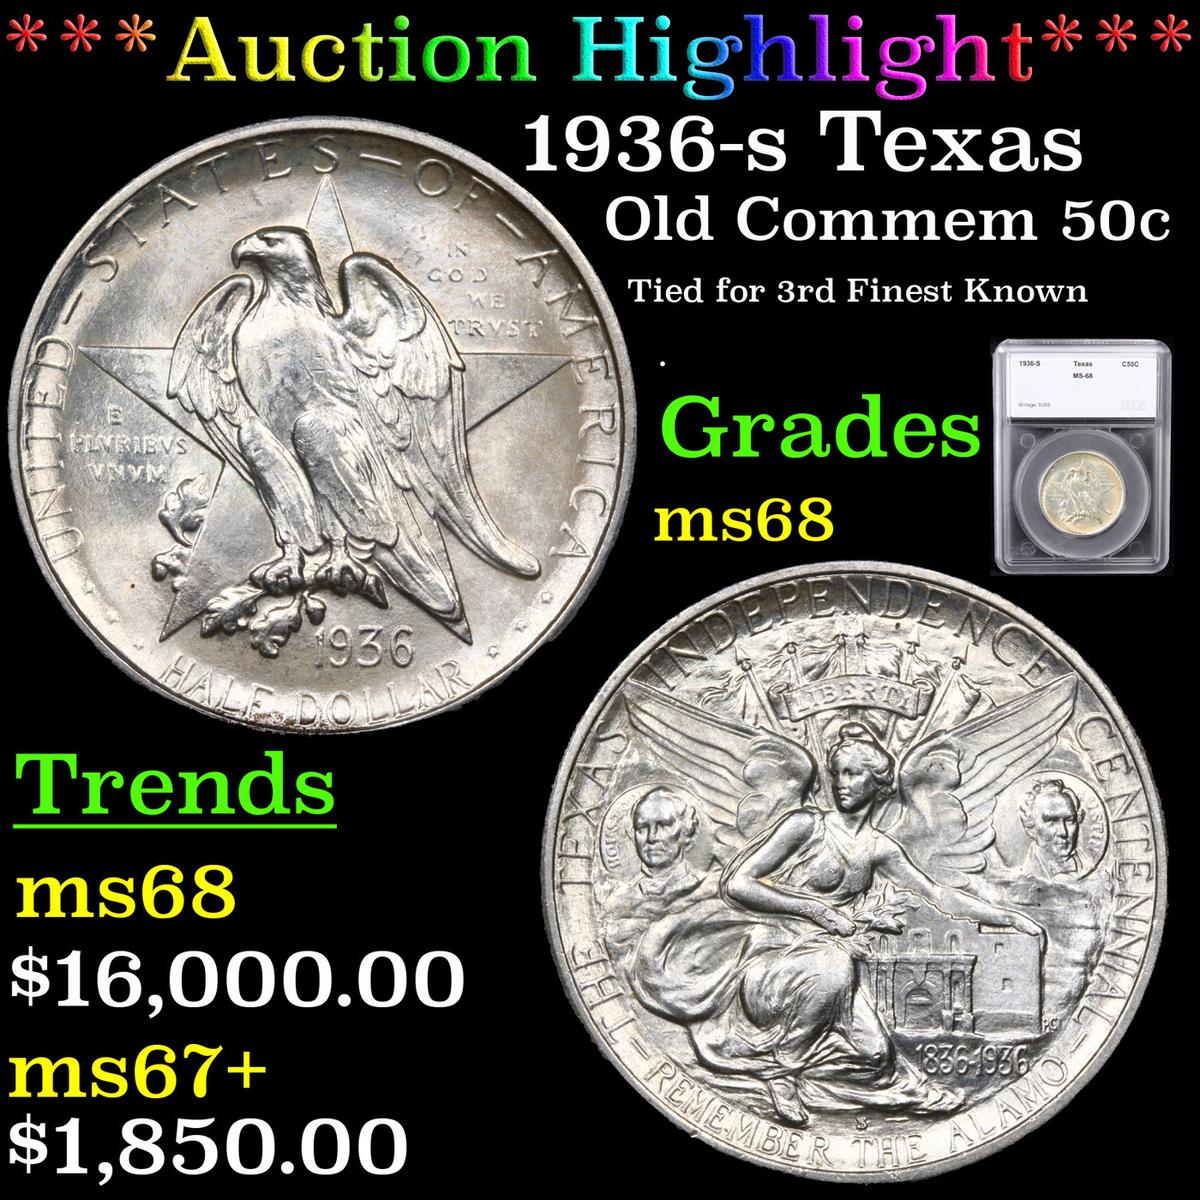 ***Auction Highlight*** 1936-s Texas Old Commem Half Dollar 50c Graded ms68 By SEGS (fc)